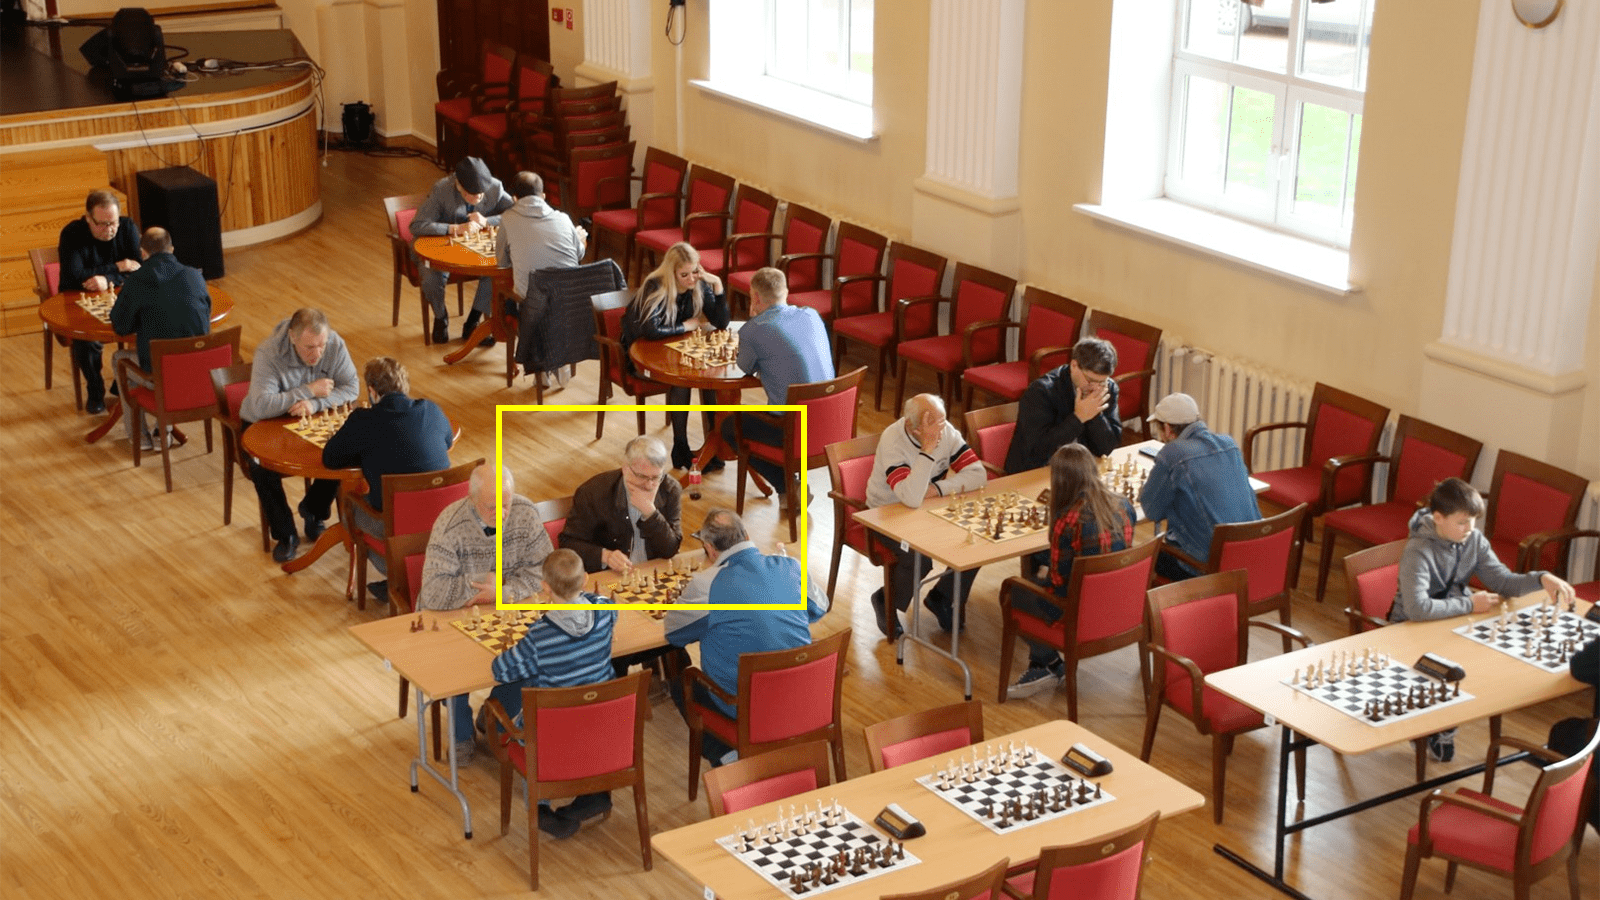 Chess grandmaster Igors Rausis accused of cheating after photo